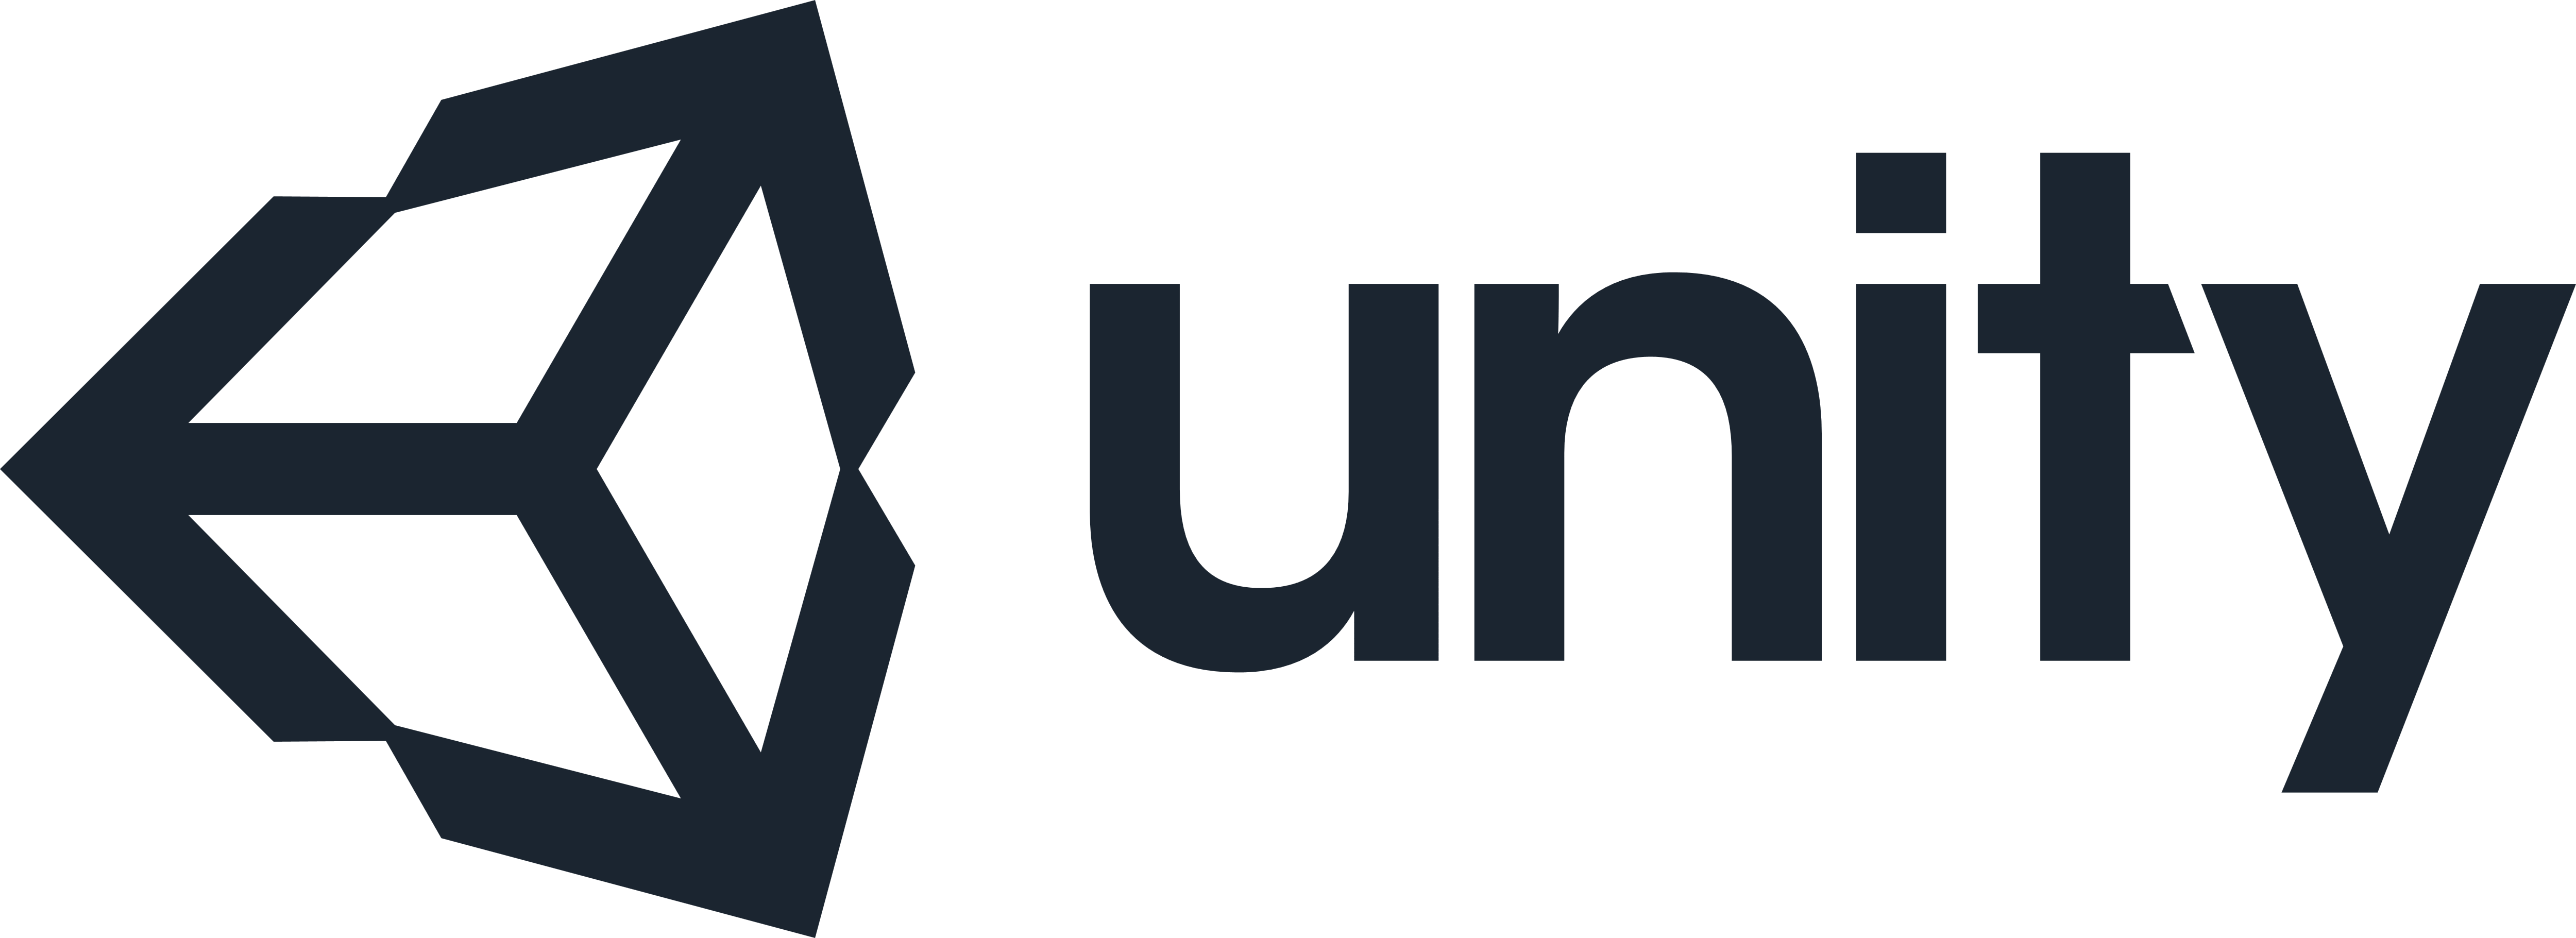 unity engine download